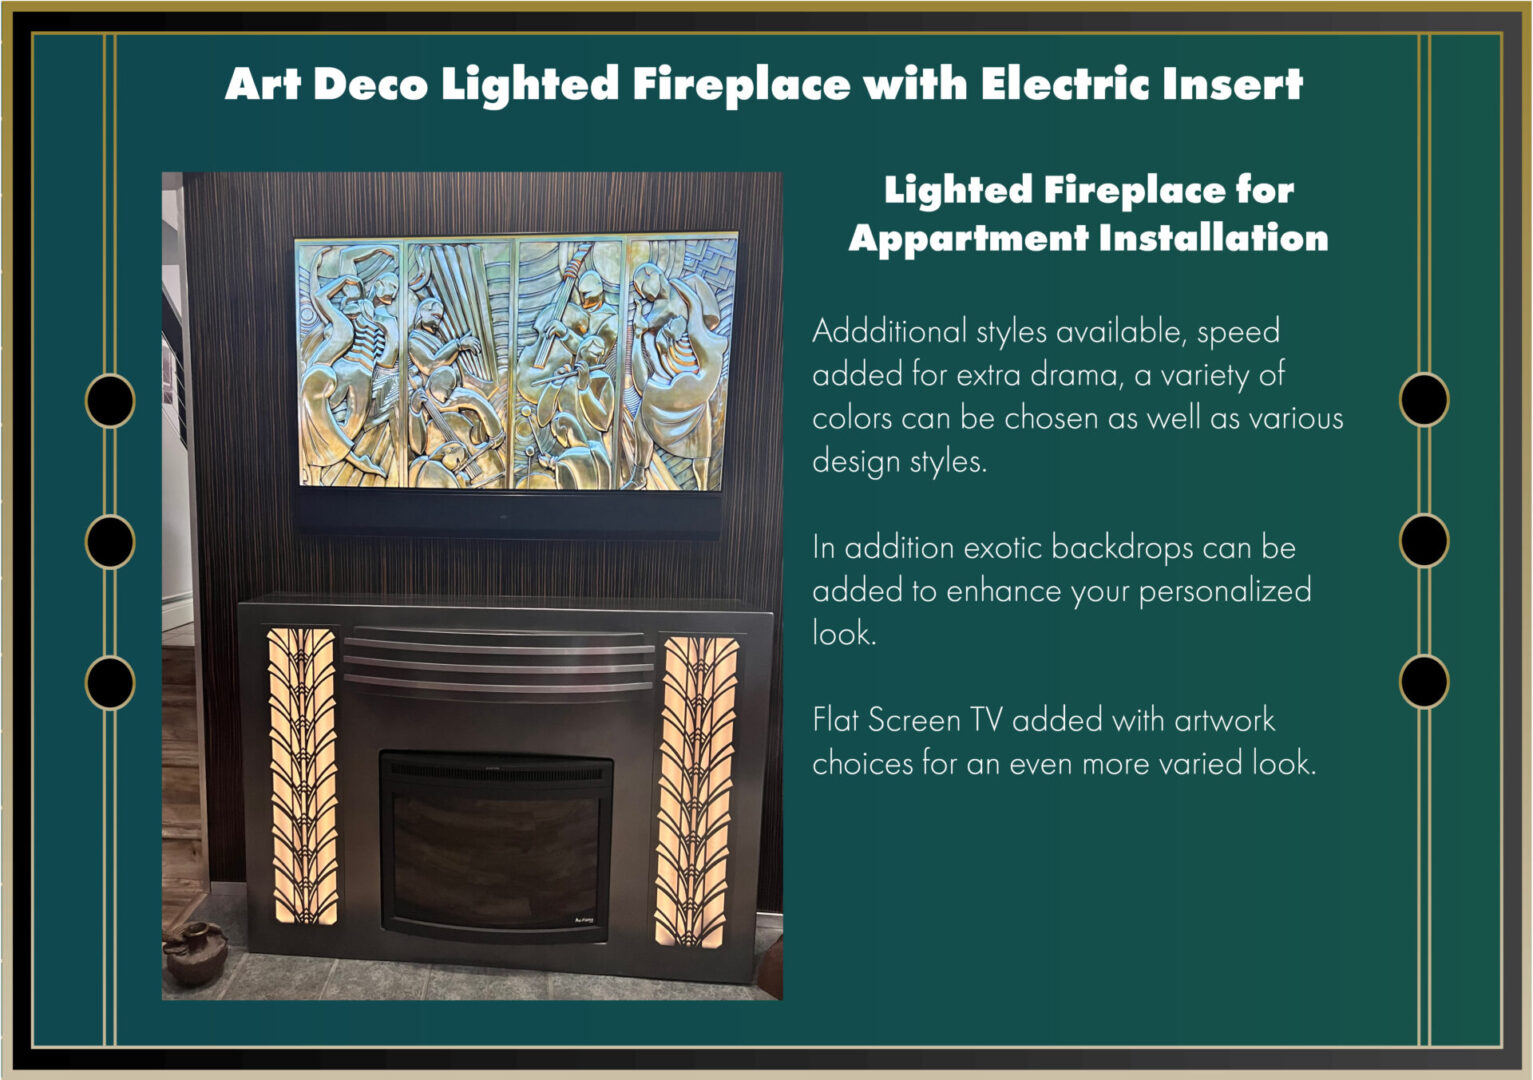 Art Deco Lighted Fireplace having Electric Insert